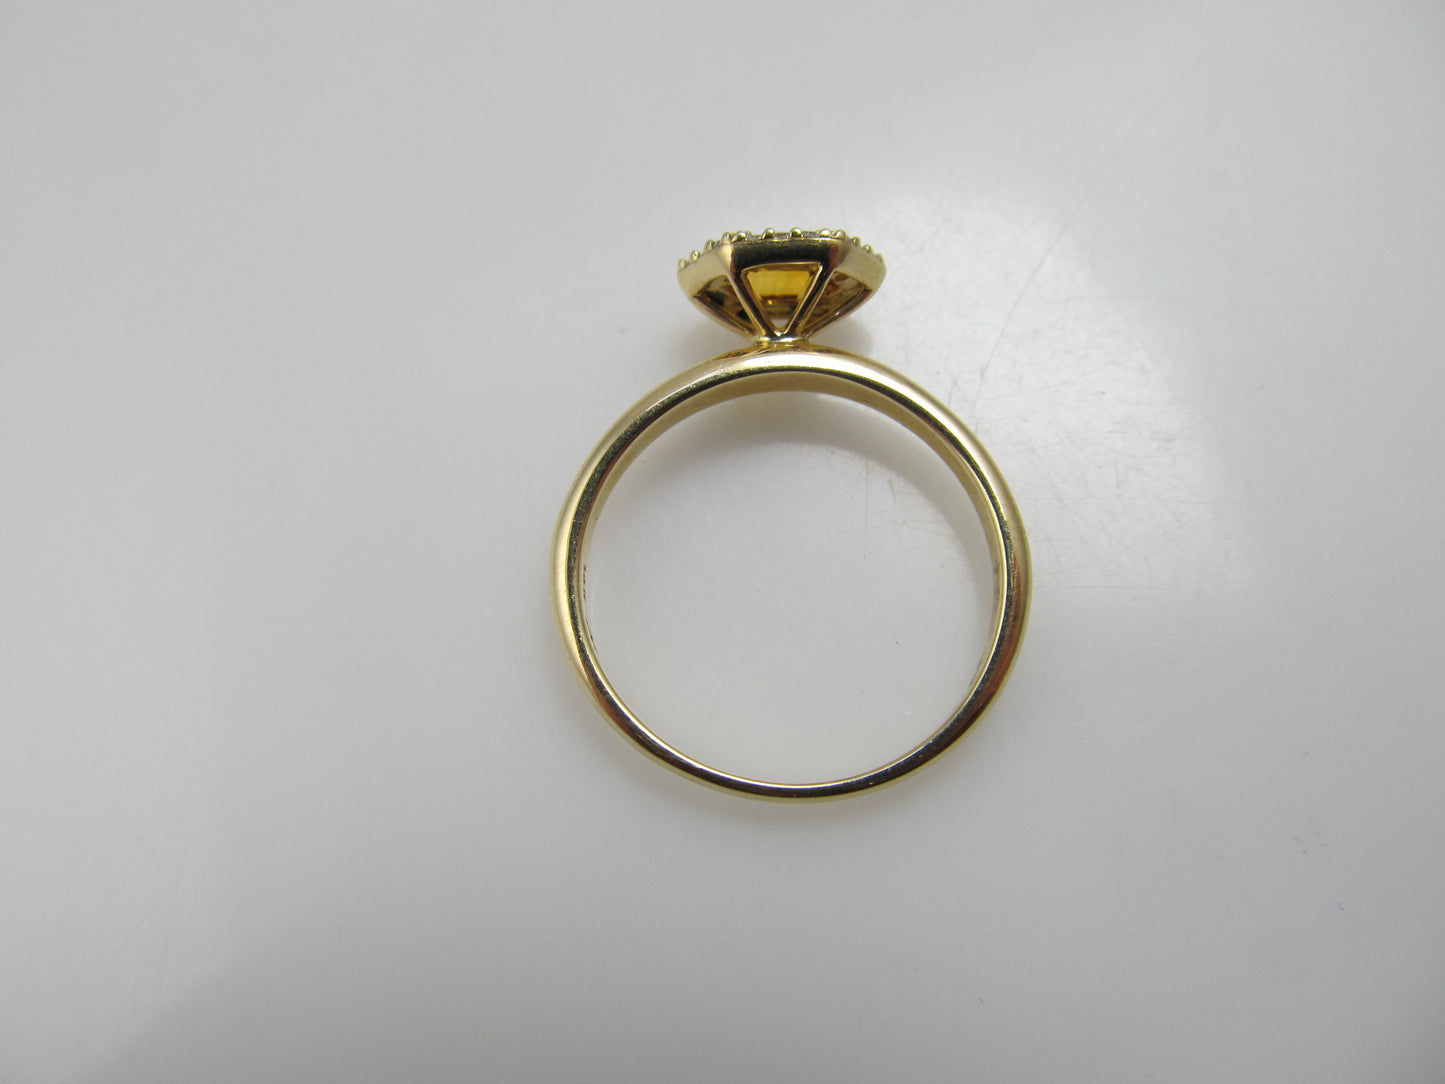 14k yellow gold citrine and diamond ring